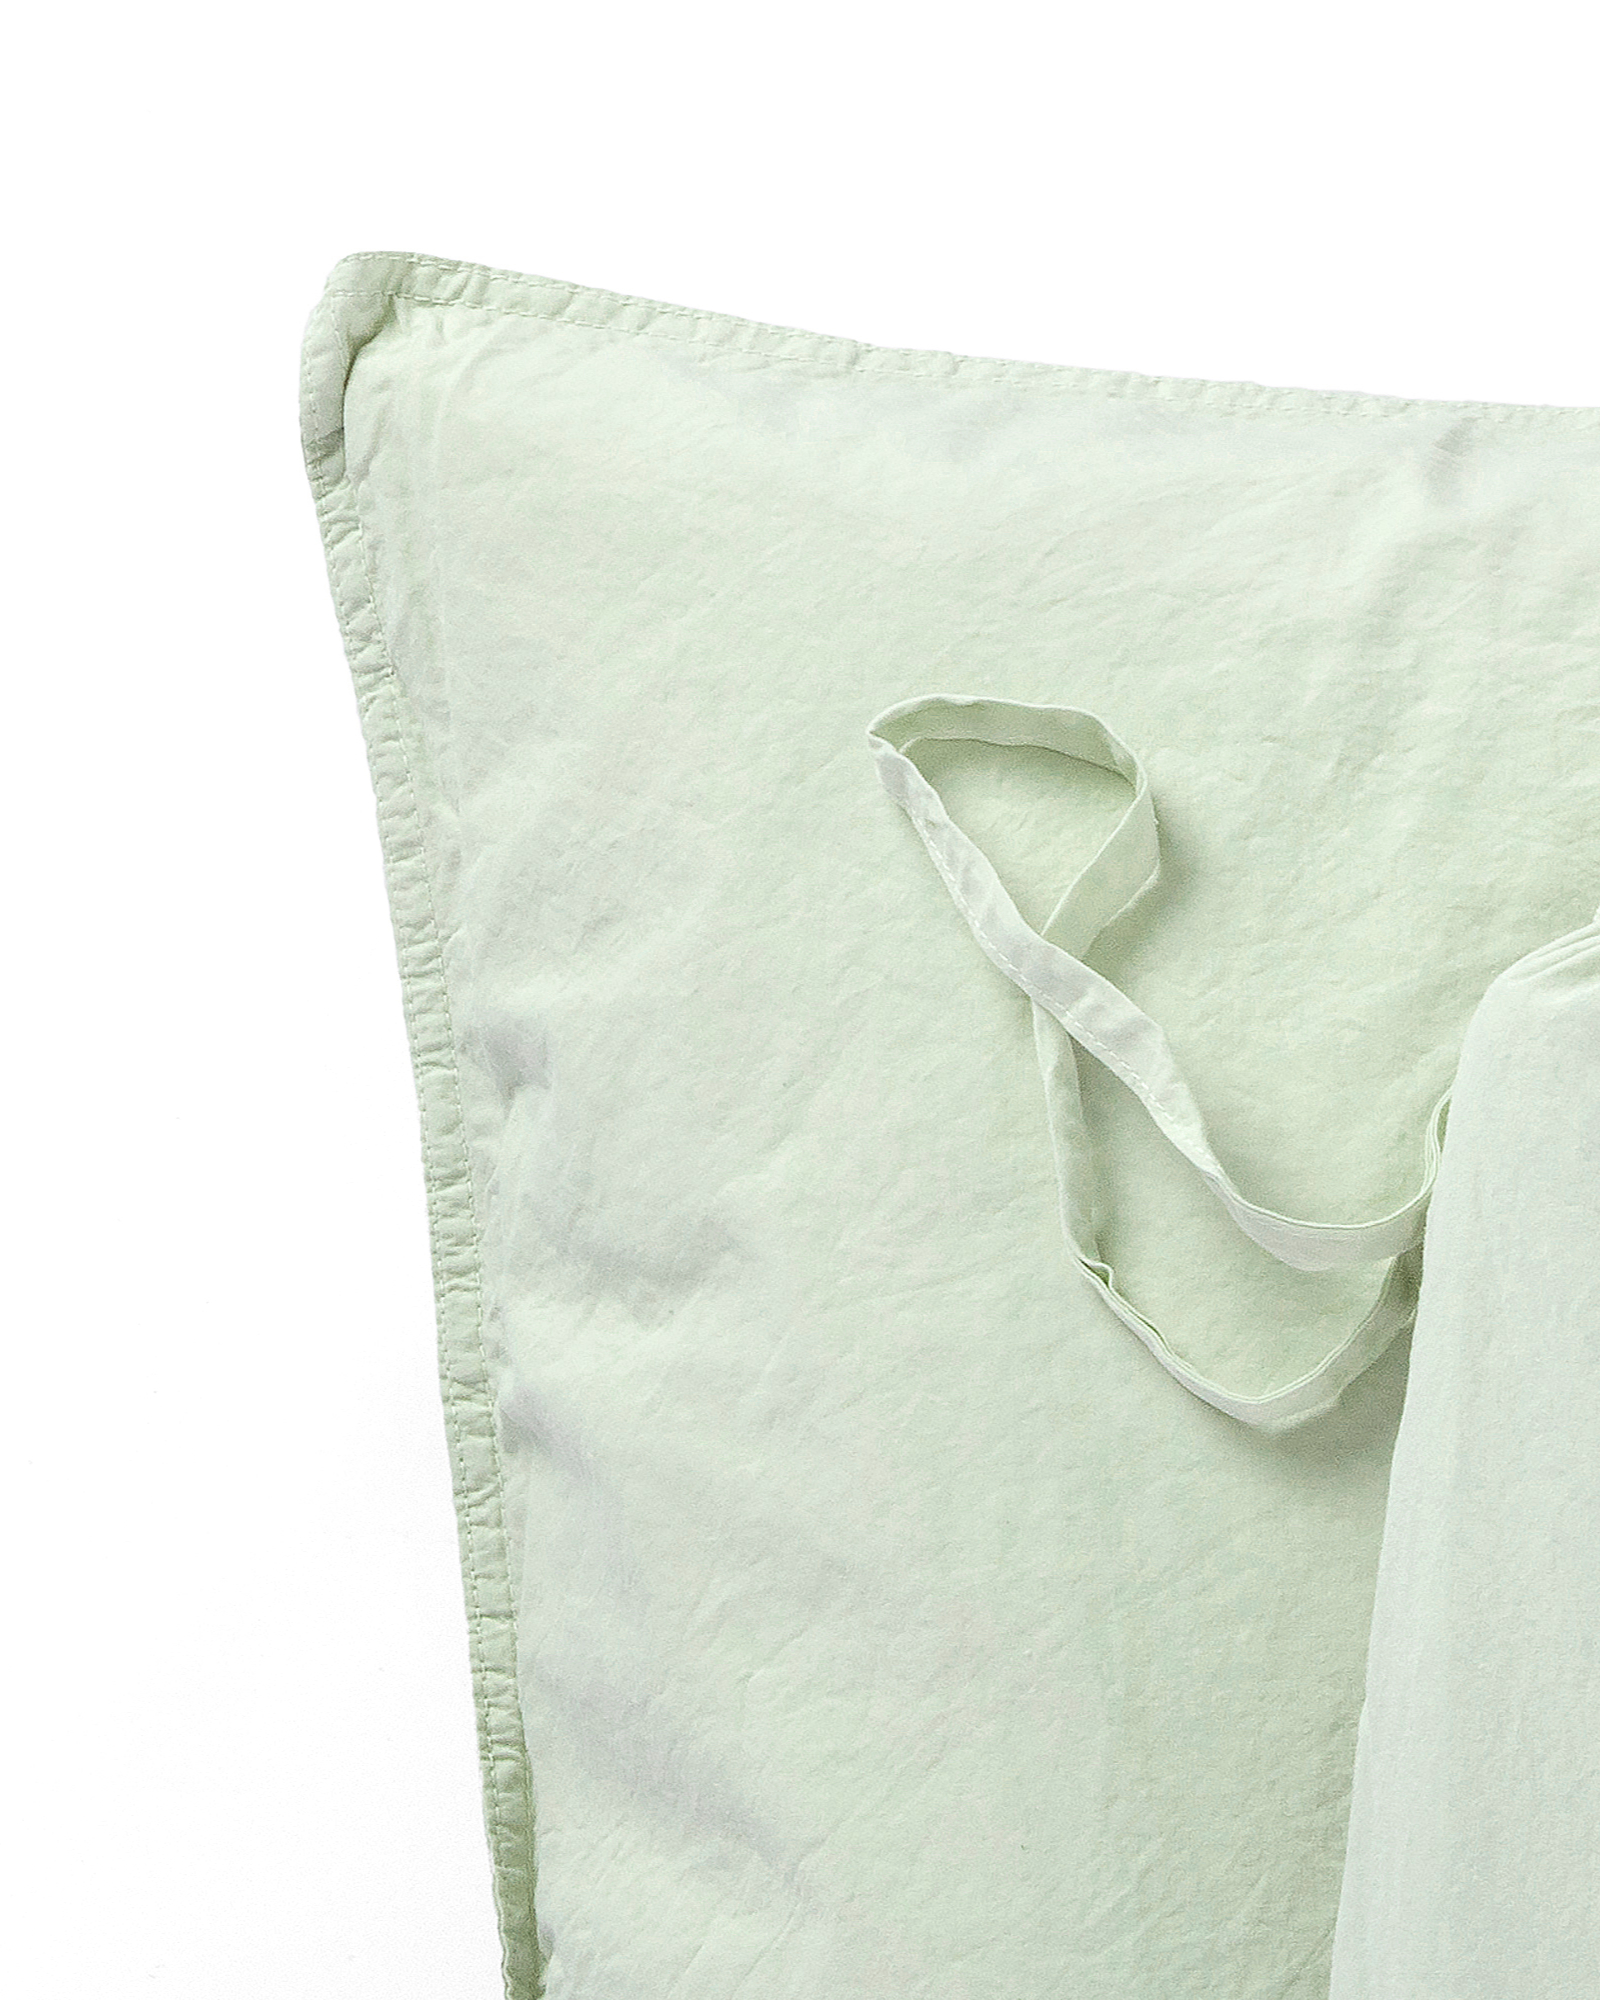 MARIE-MARIE - Pillowcase VINTAGE COTTON Green tea - 50x75 cm - Green tea